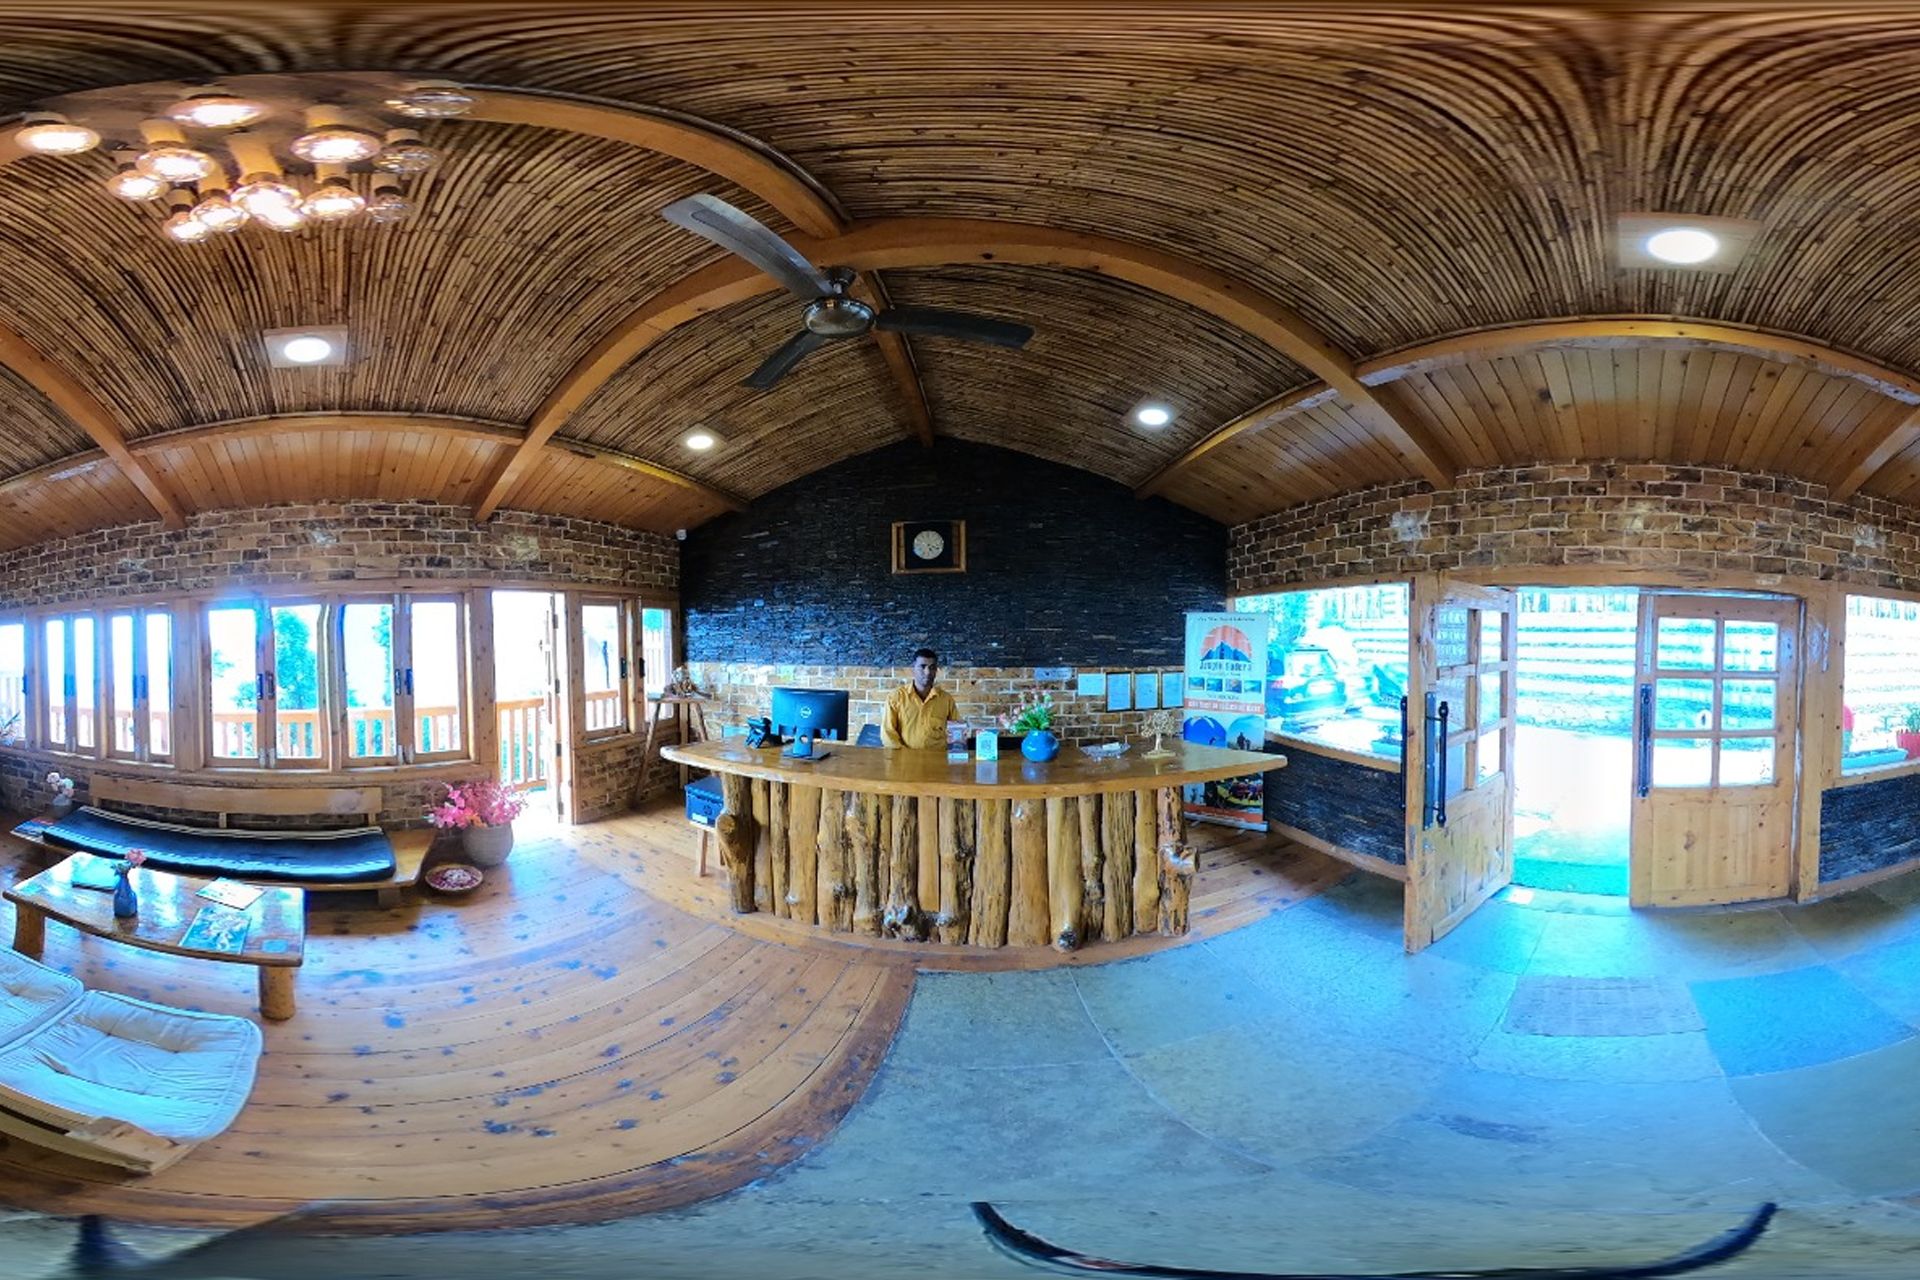 360° Virtual Tour of The Peru Resort